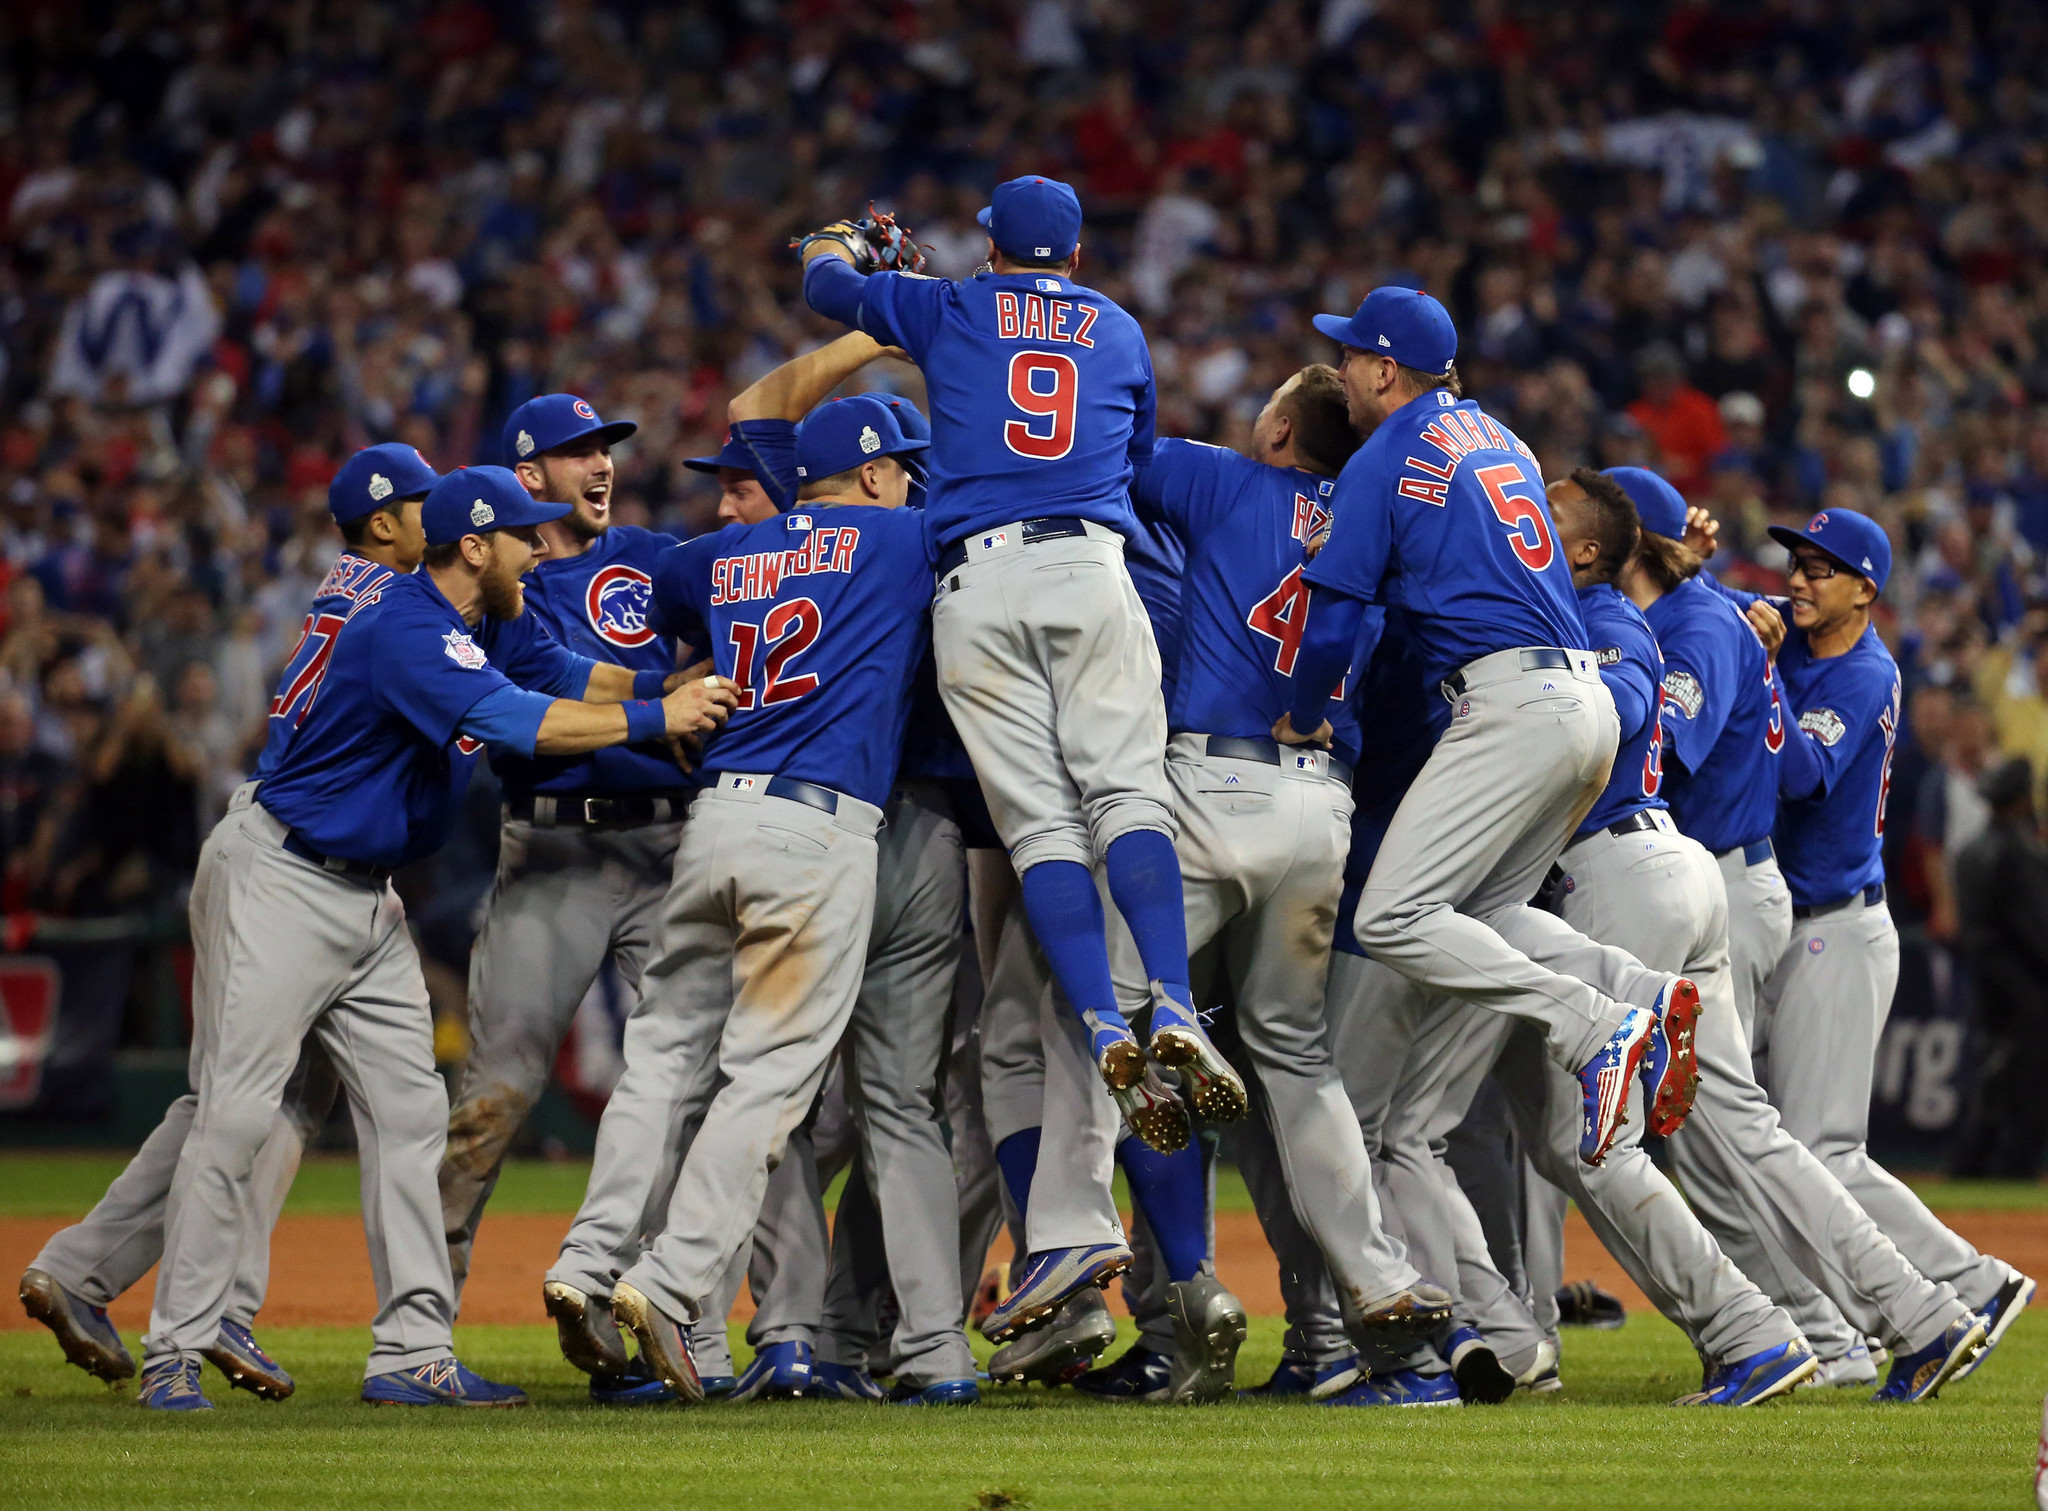 Cubs' World Series win makes World Almanac's Top 10